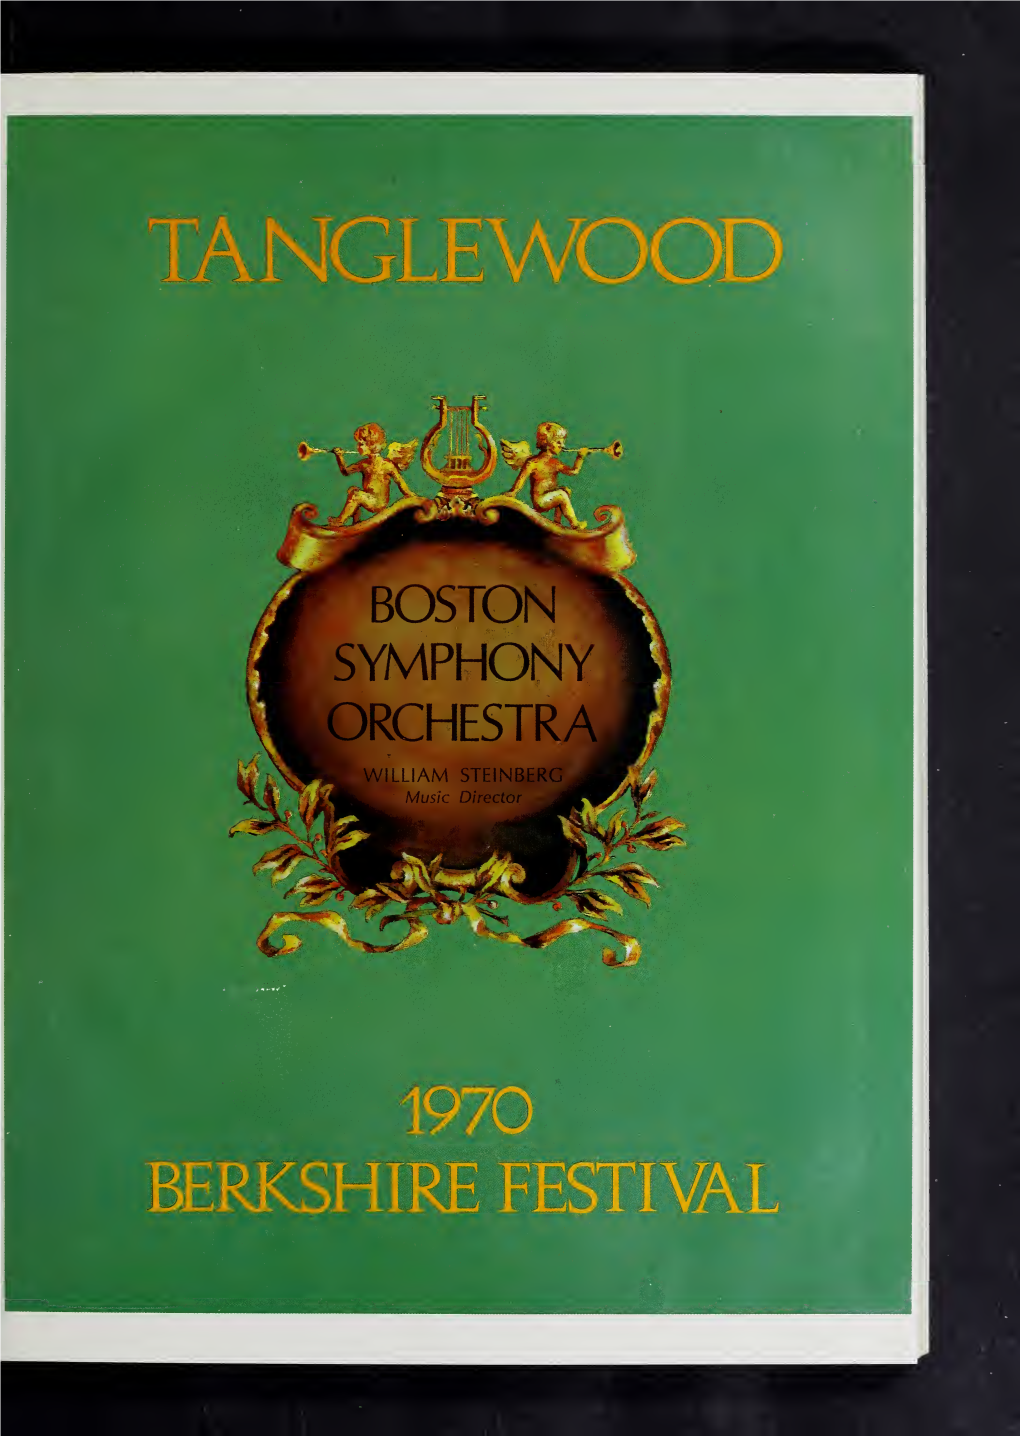 Boston Symphony Orchestra Concert Programs, Summer, 1970, Tanglewood